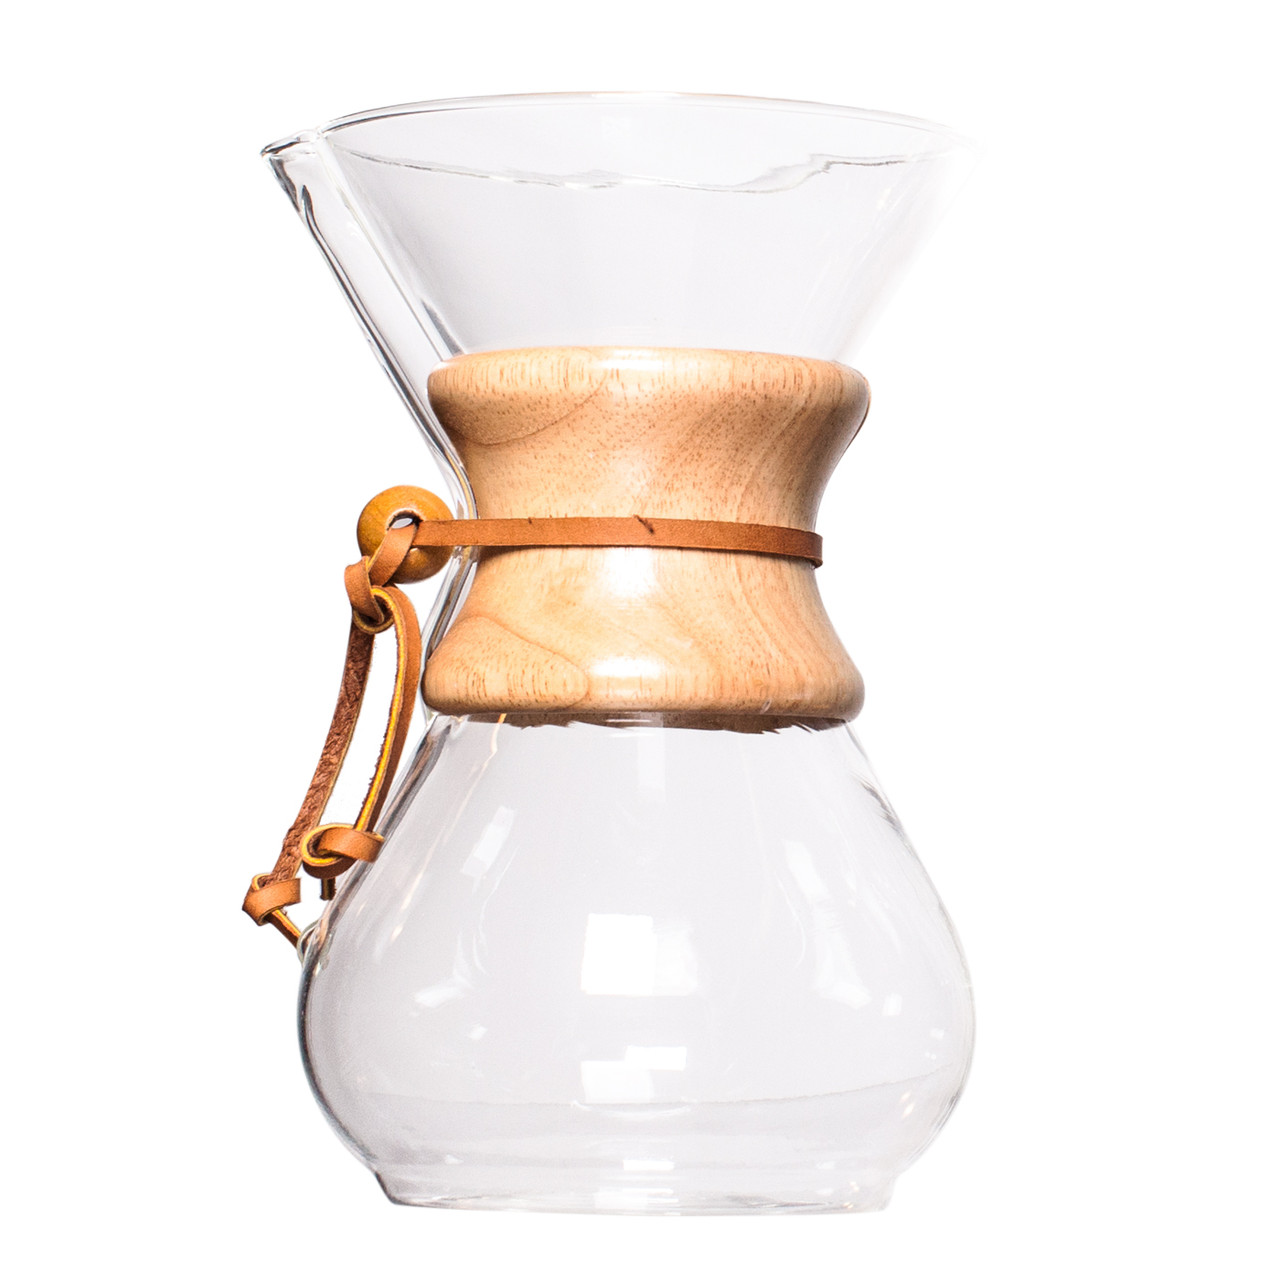 Chemex Brewing Guide - Prima Coffee Equipment